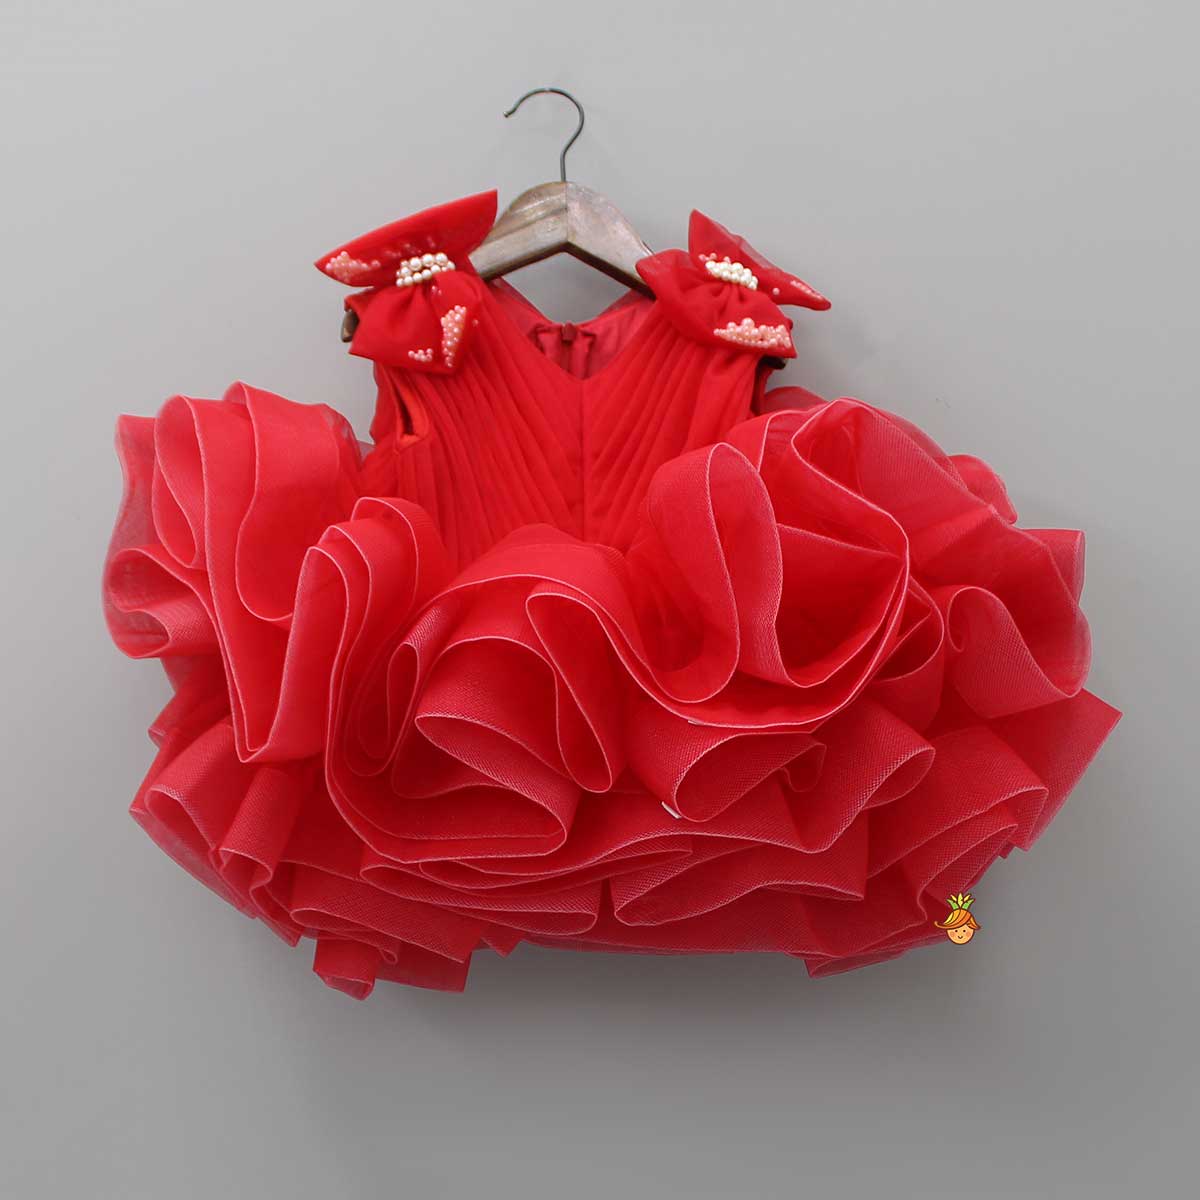 Bows Enhanced Ruffle Layered Red Net Dress